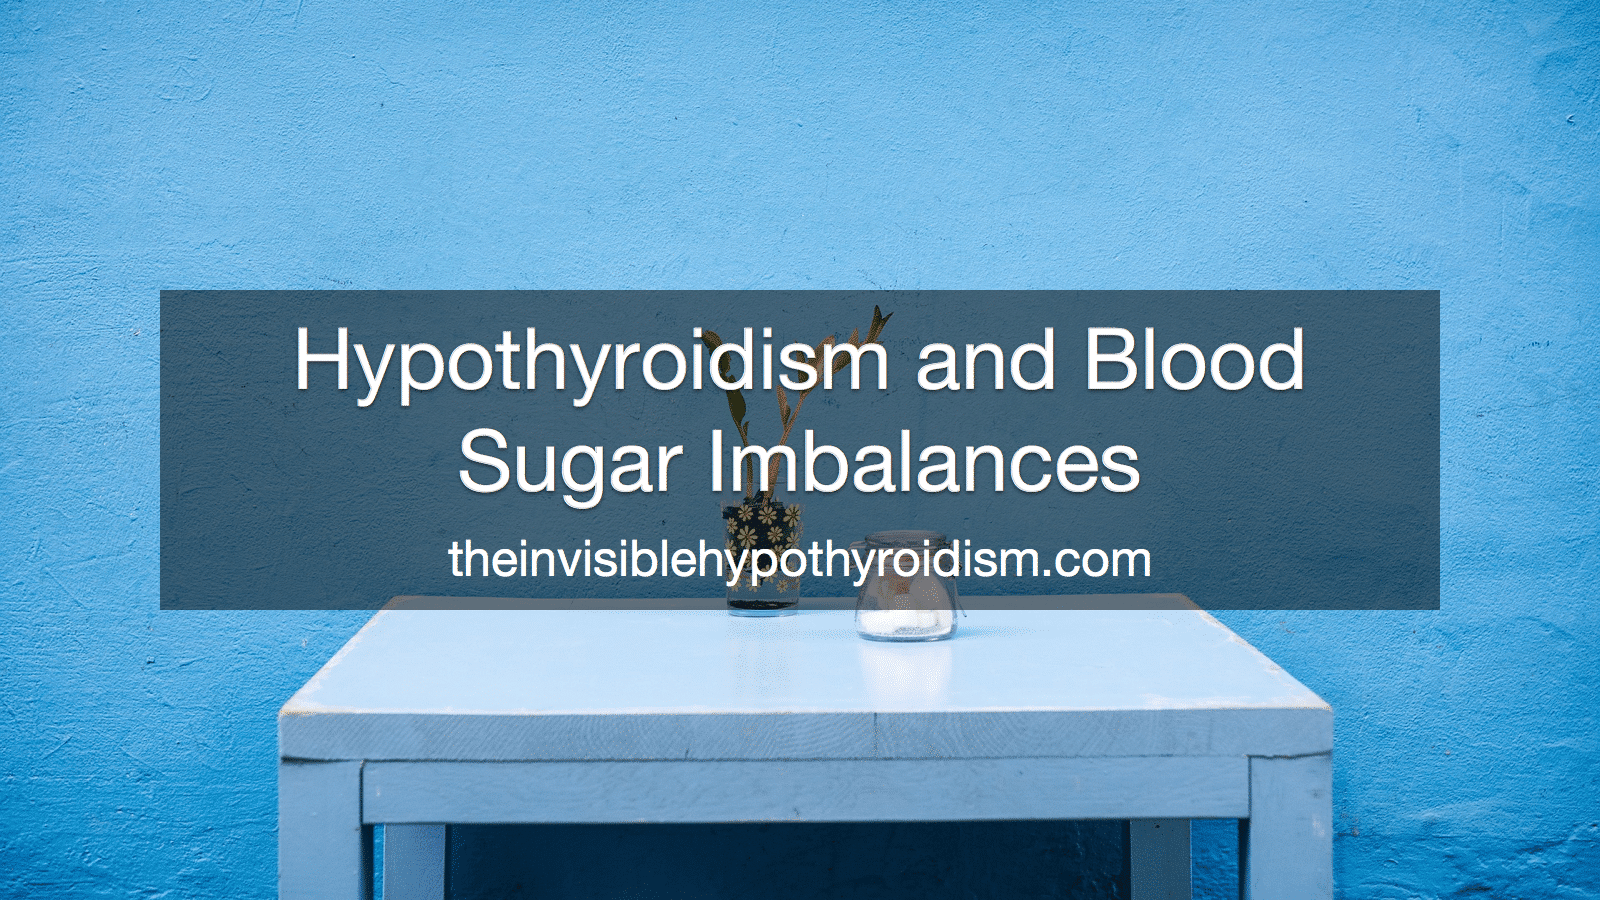 Hypothyroidism and Blood Sugar Imbalances